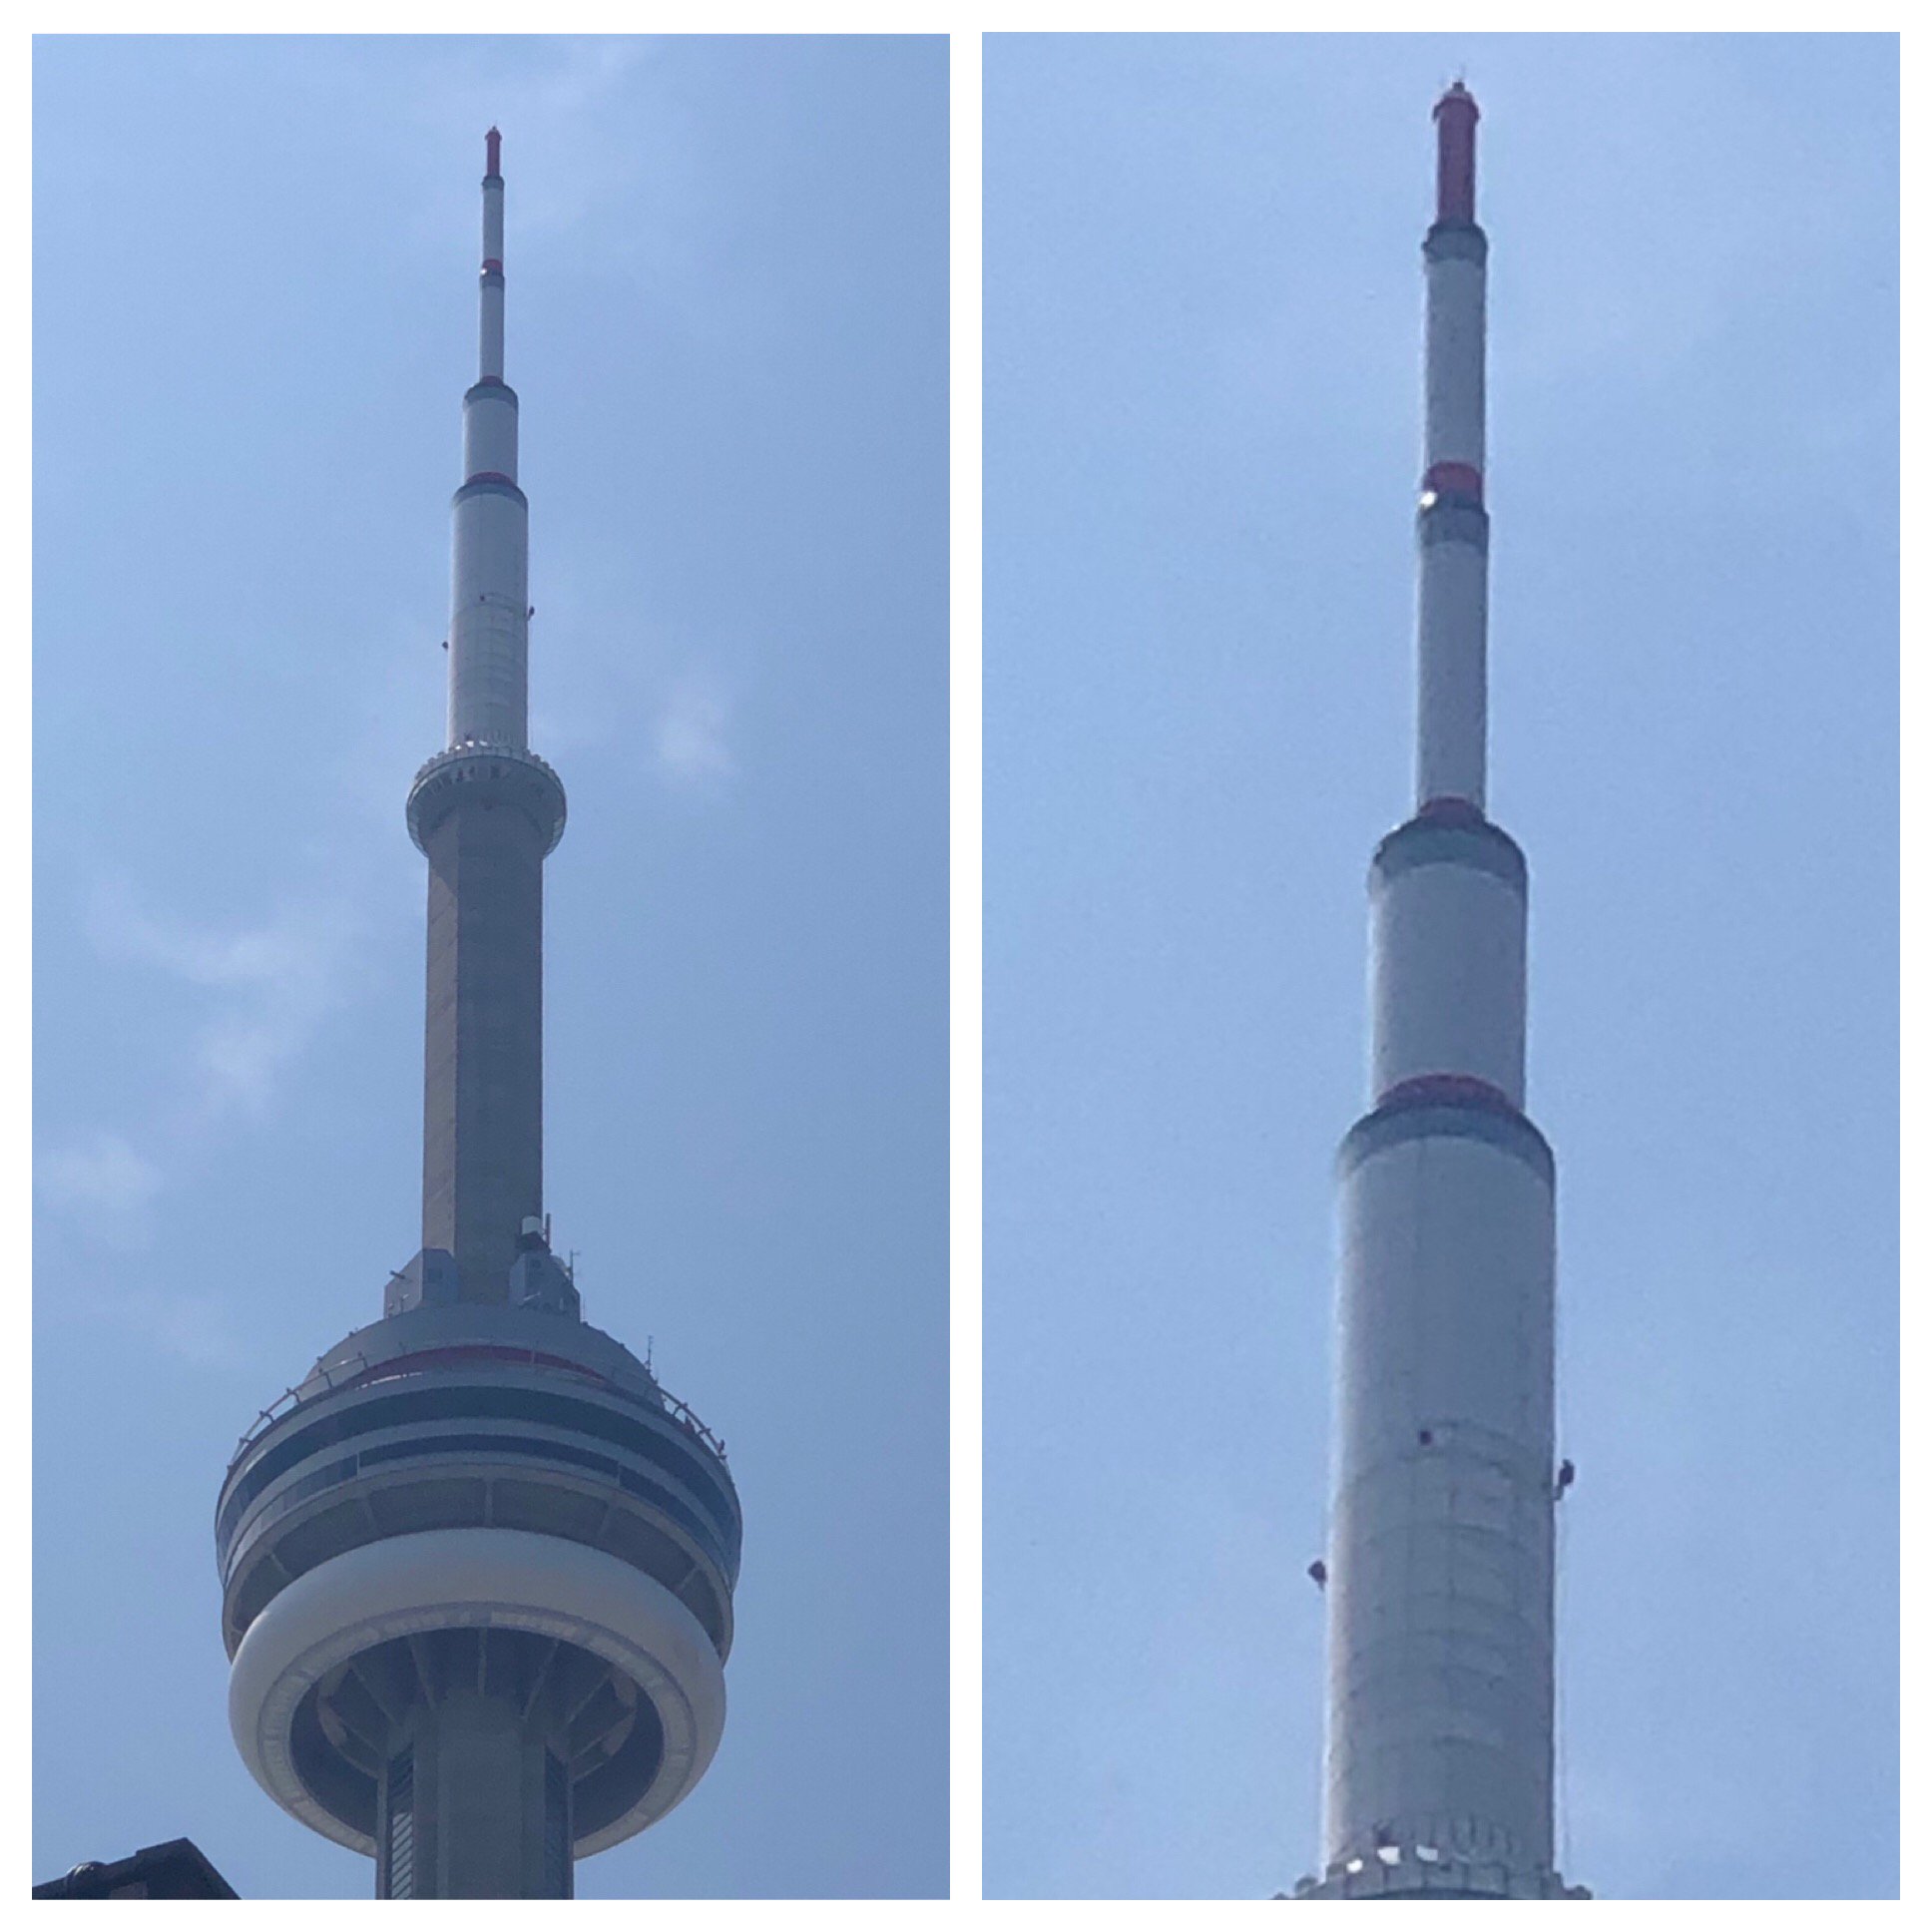 CN Tower / Tour CN on X: Painting the antenna so we continue to shine! /  Nous avons peint notre antenne afin de continuer de briller! #cntower  #tourcn #mycntower  / X